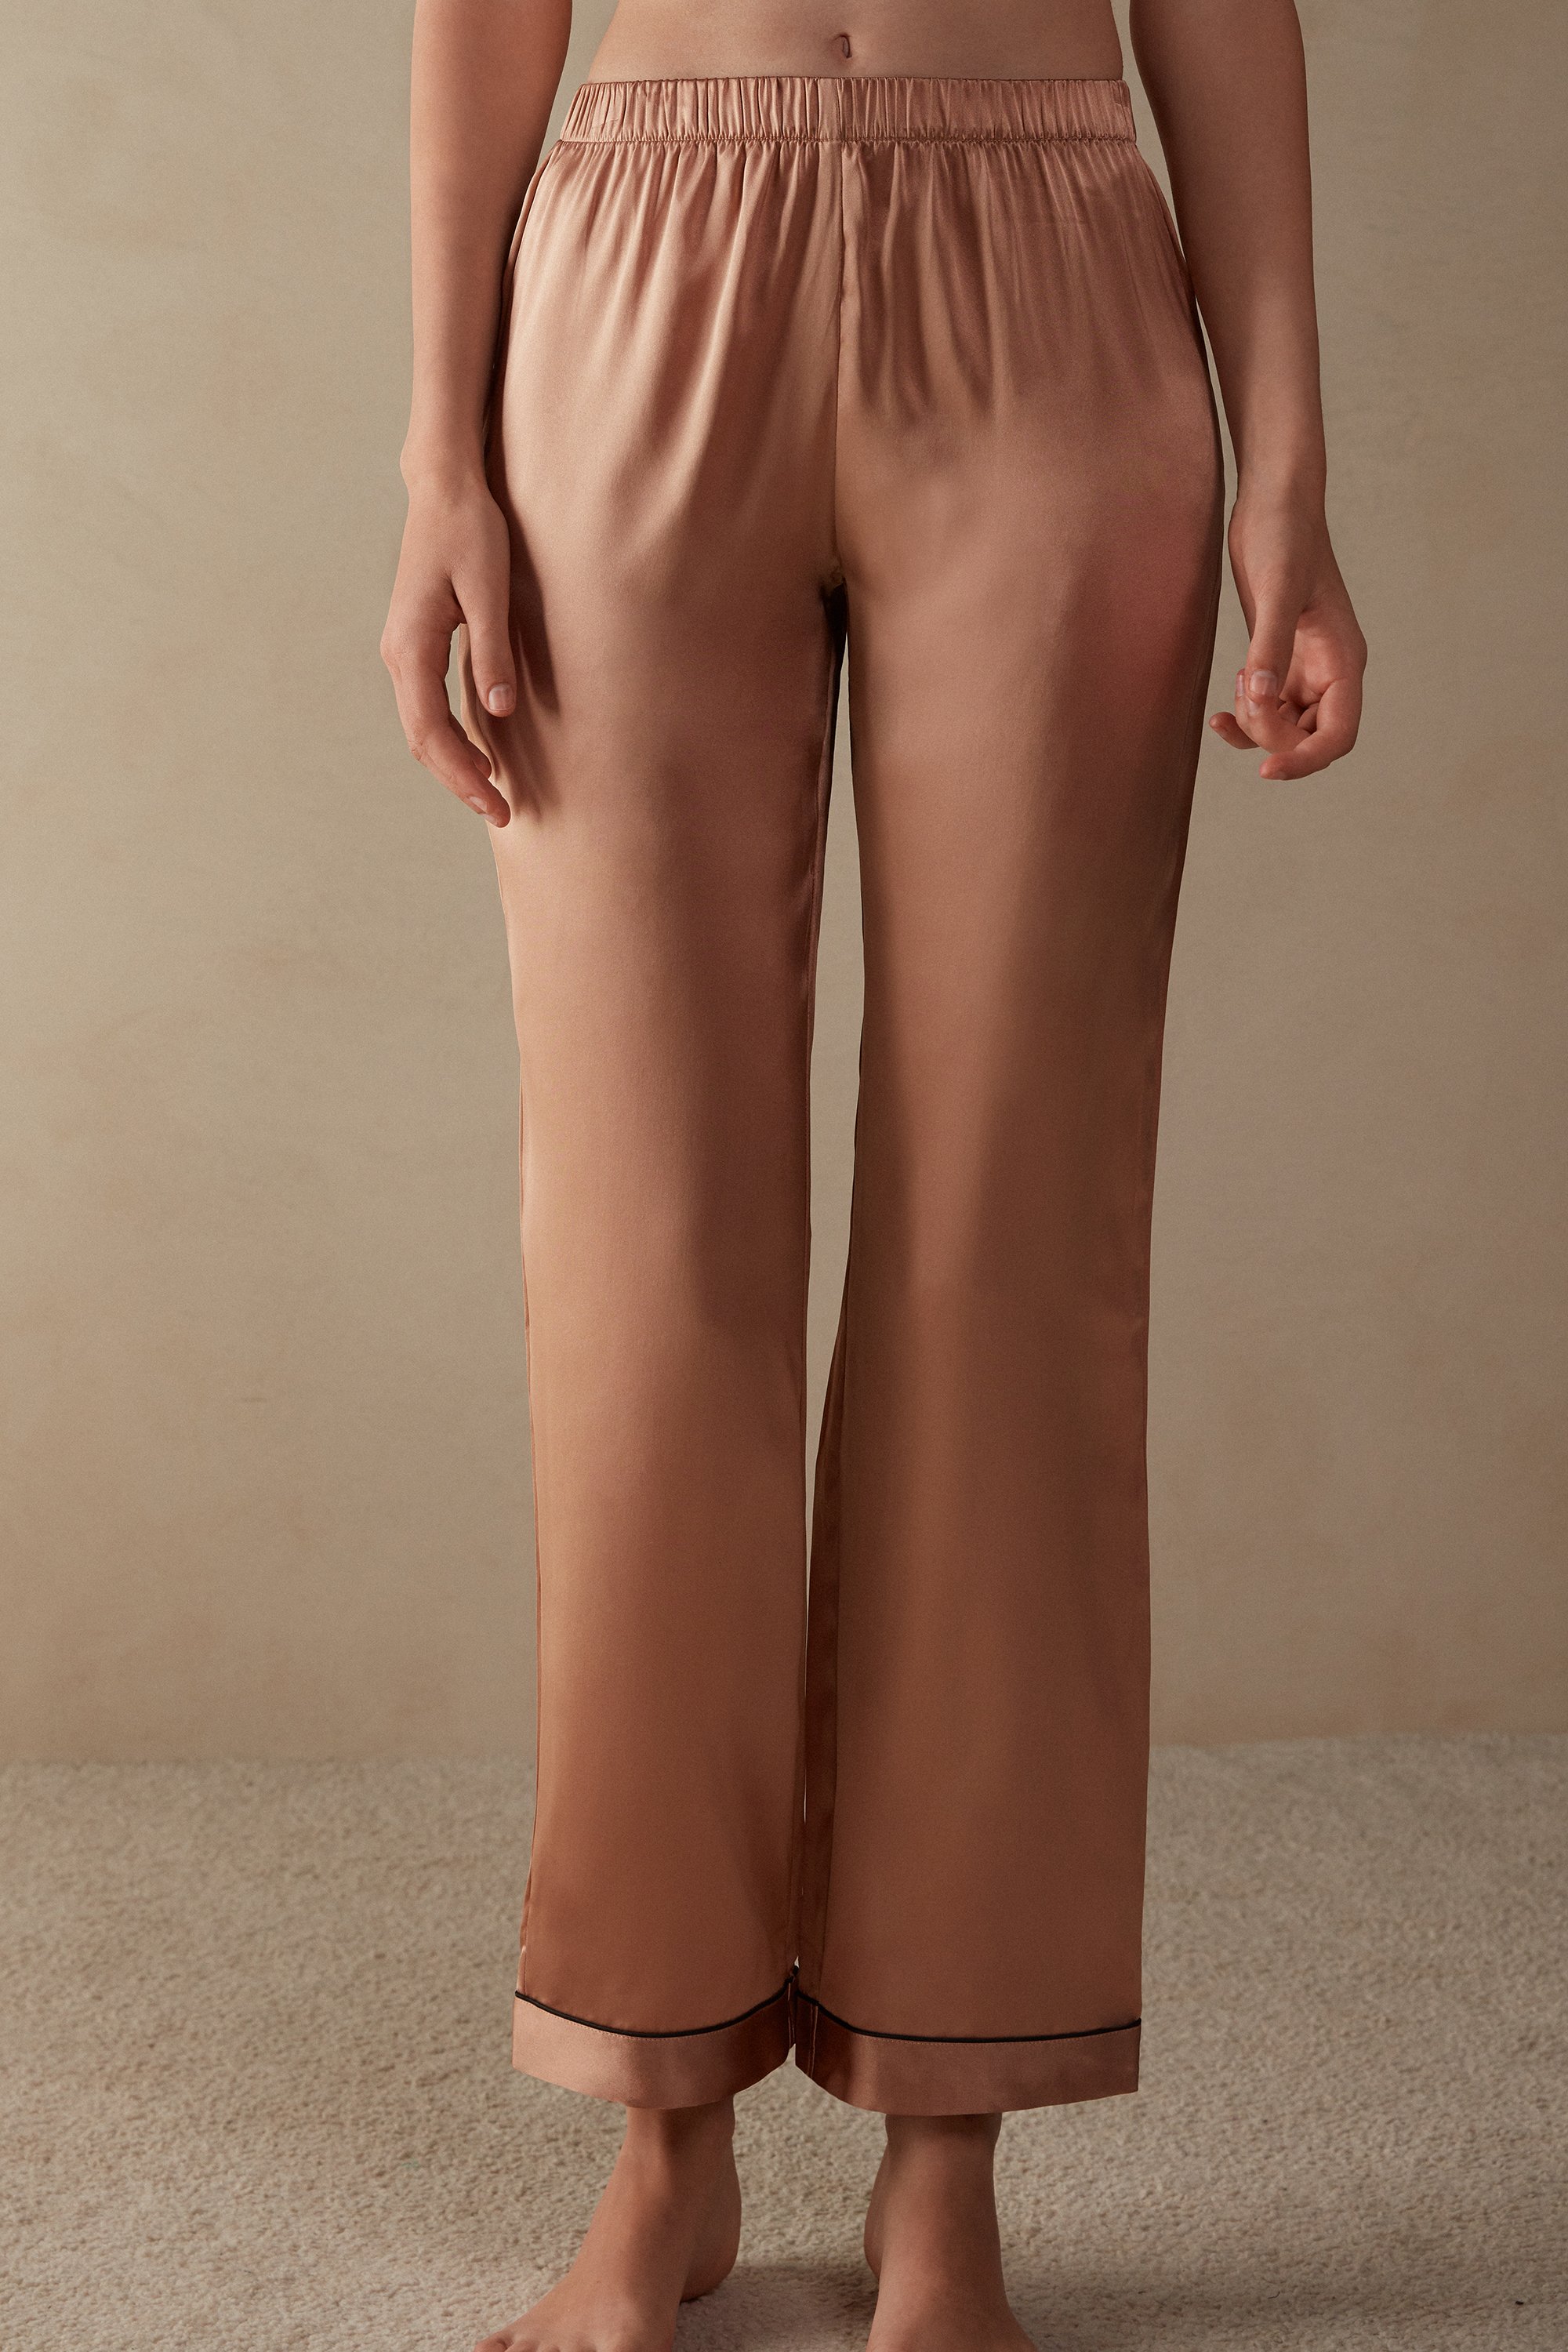 Intimissimi Silk Satin Pajama Pants Woman Pale Grey Size S